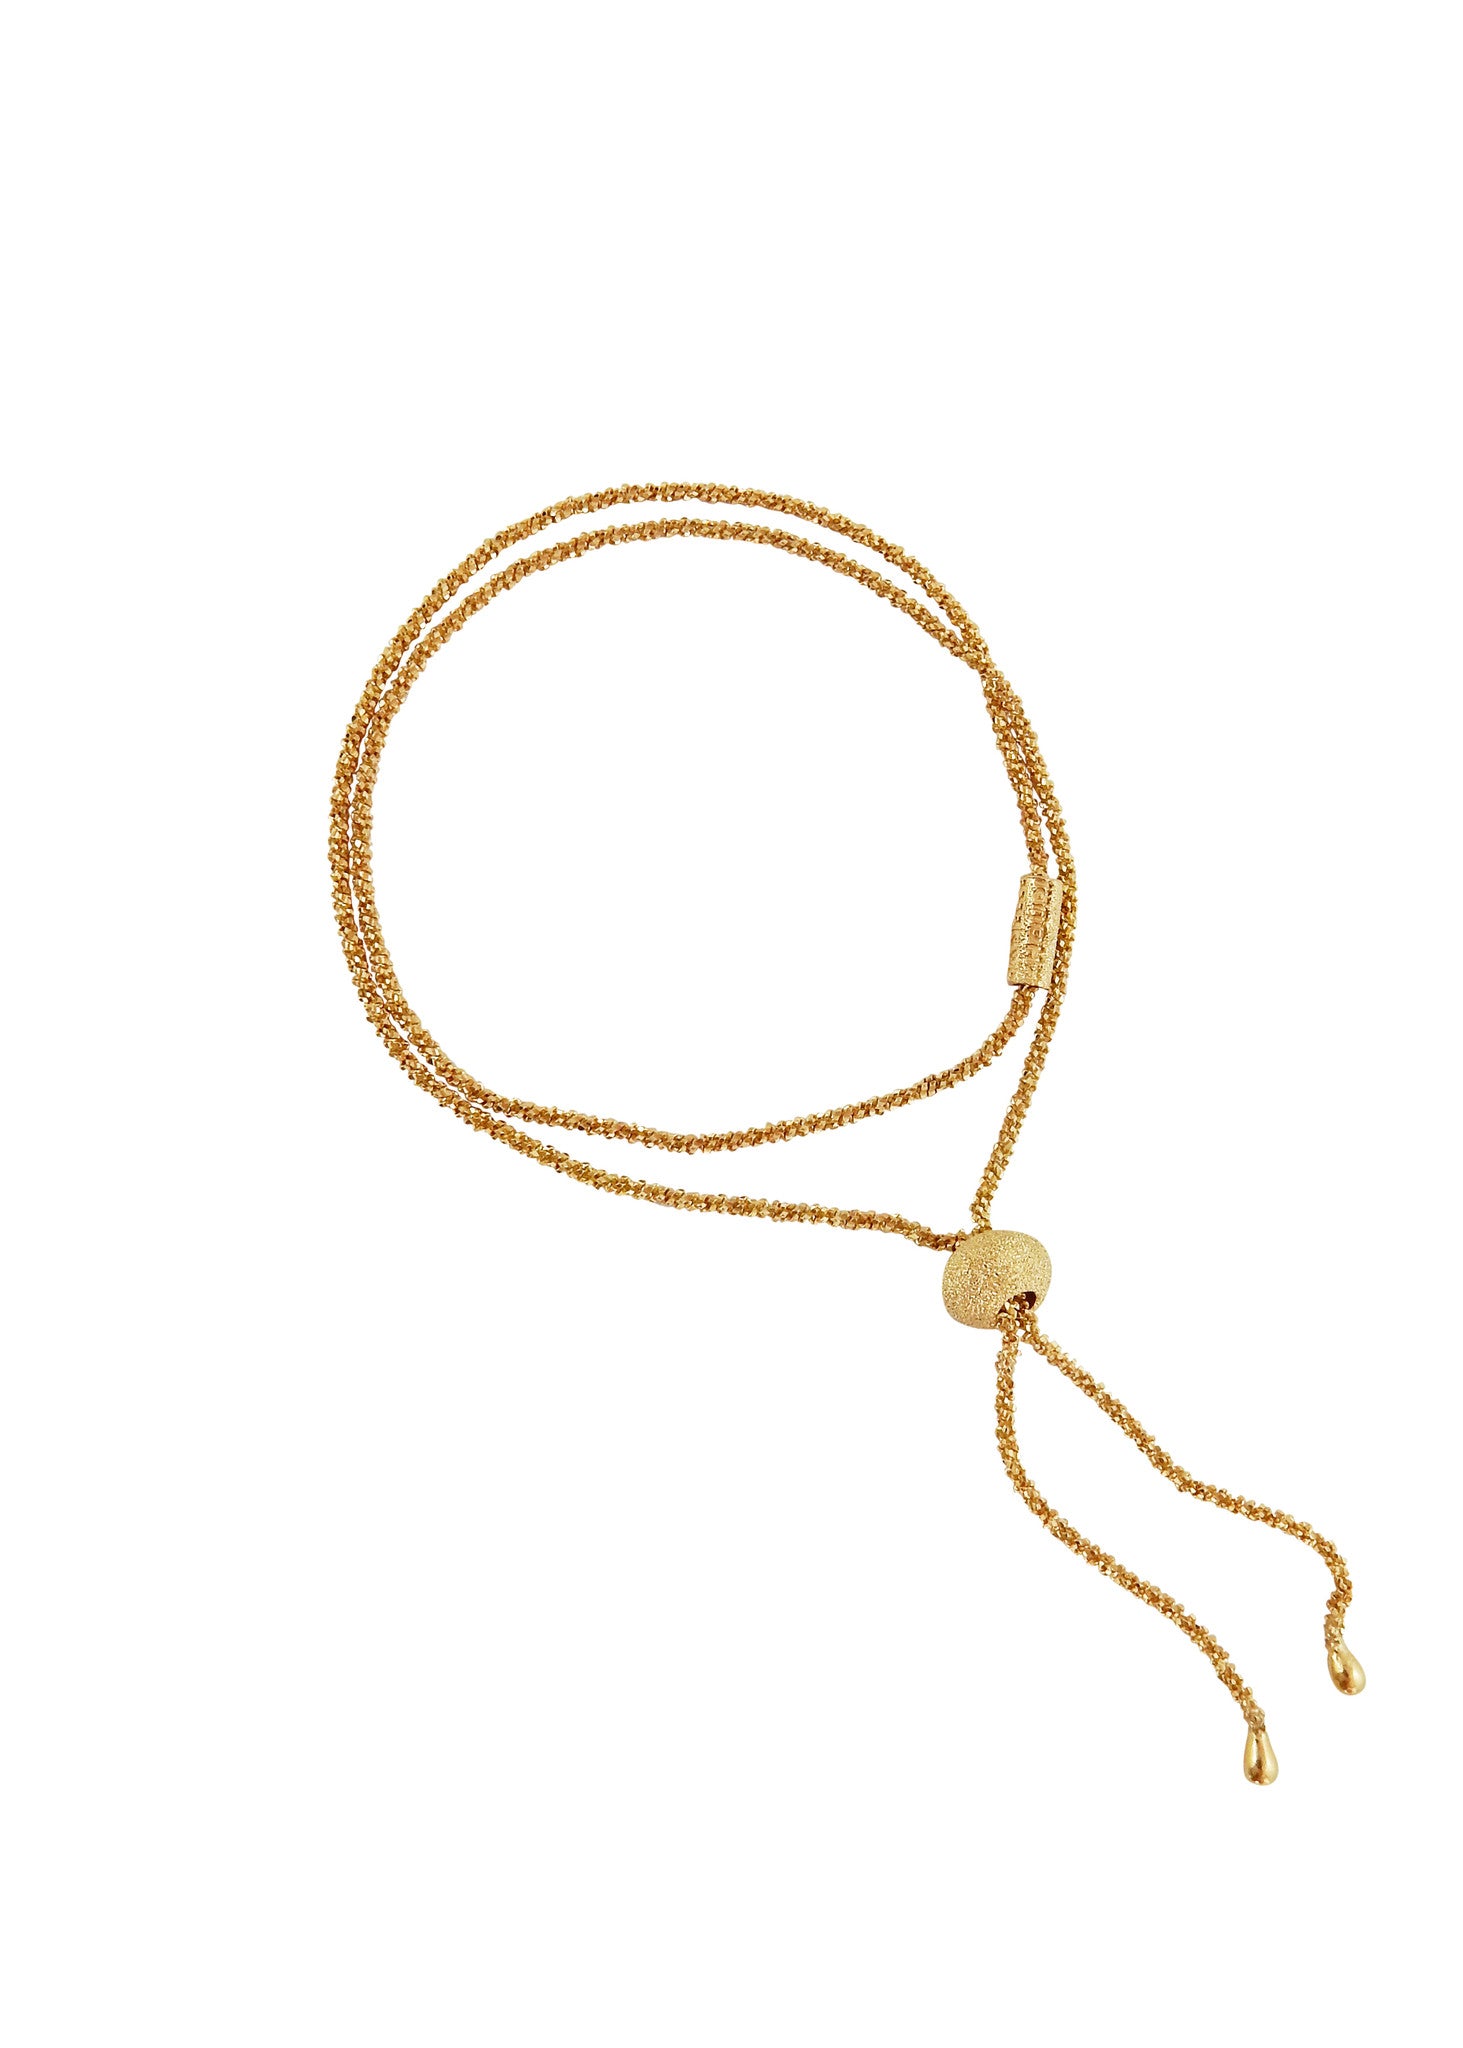 Janelle Khouri Sparkle Wrap Bracelet, Gold